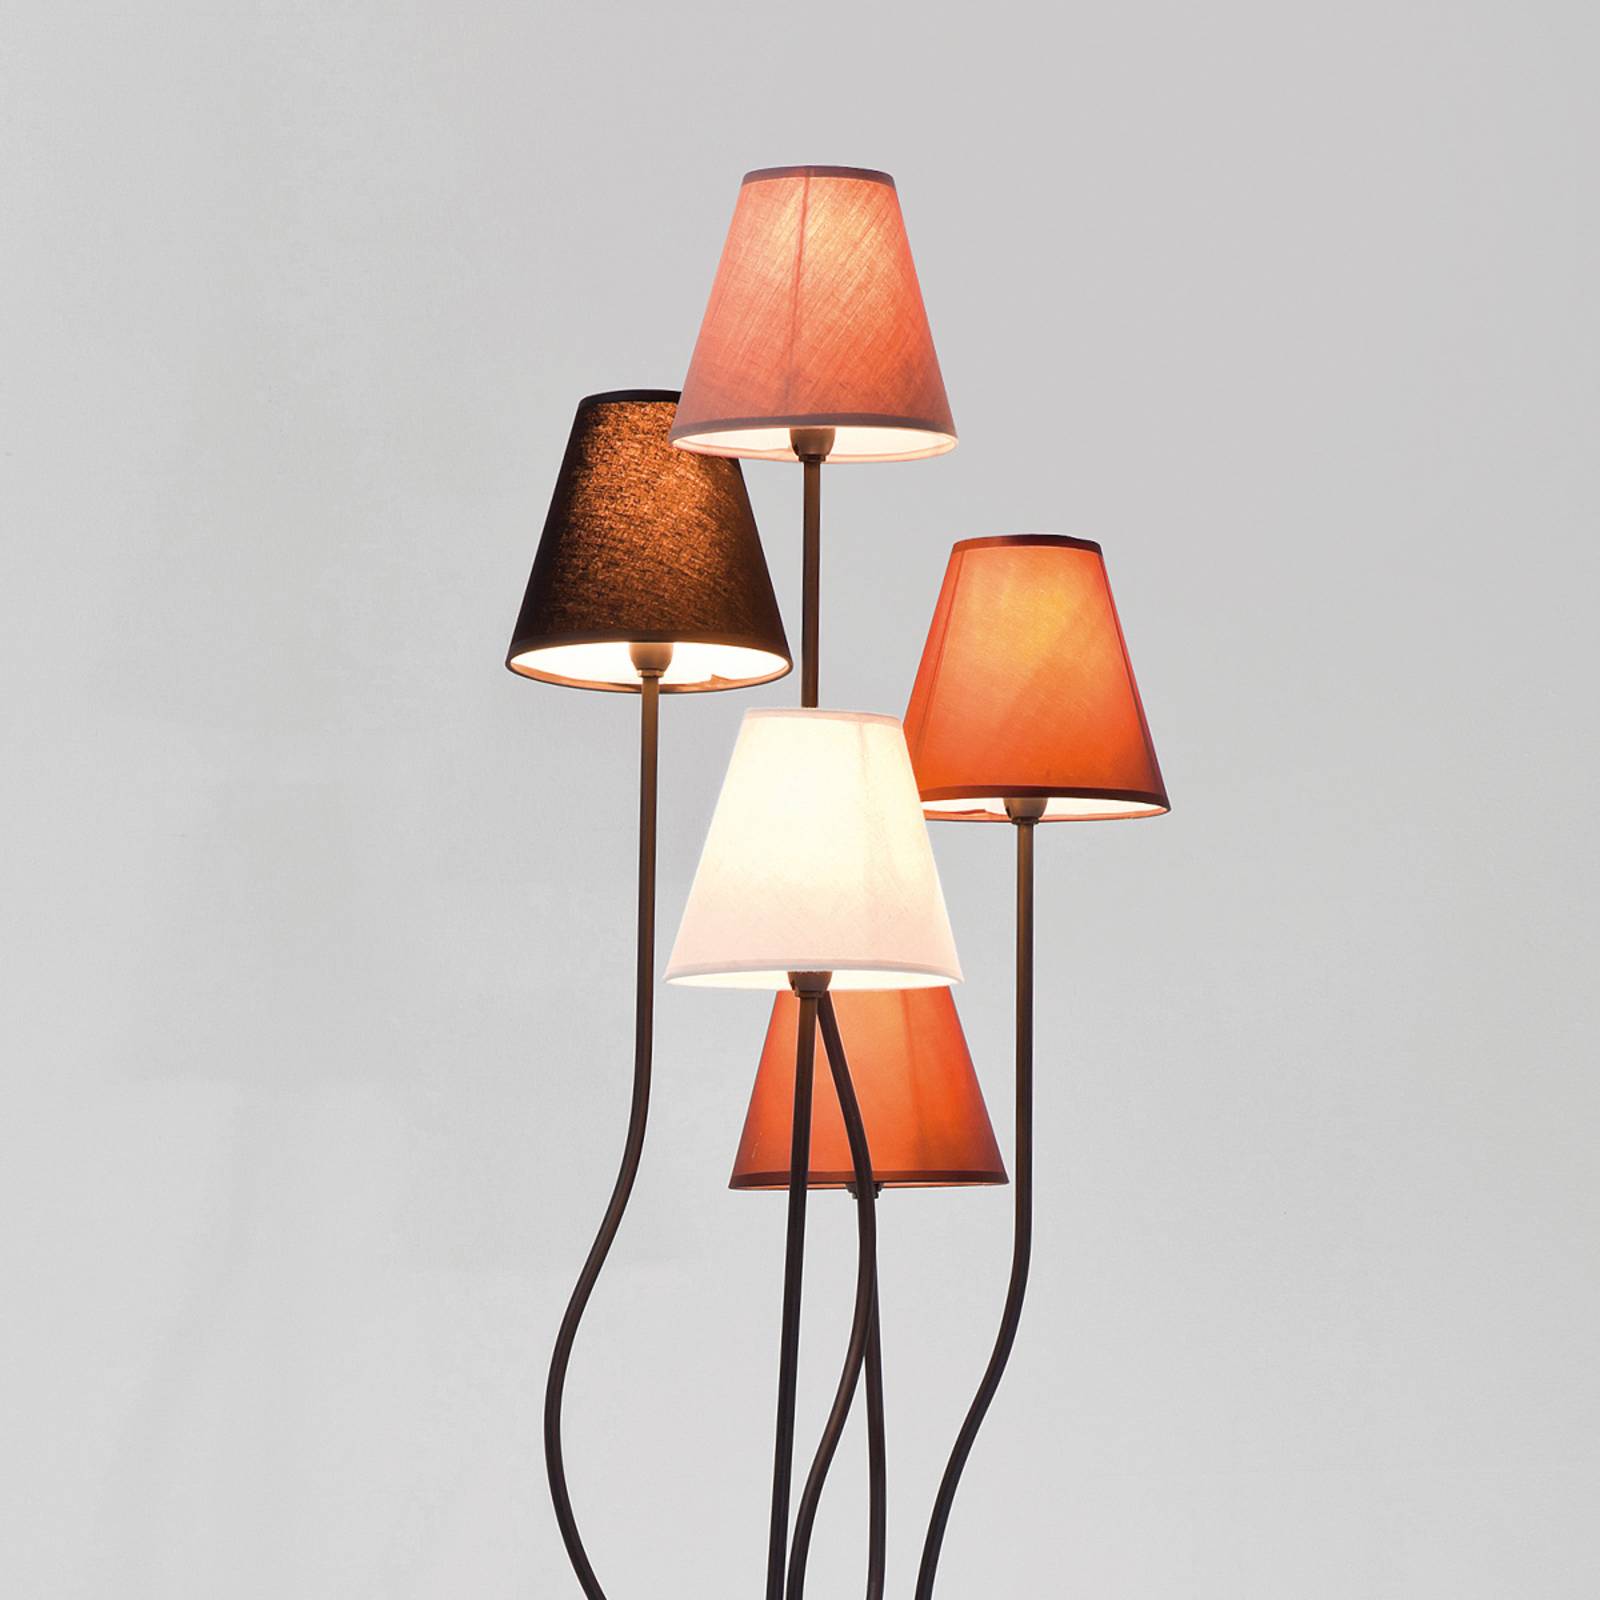 Image of KARE Flexible Mocca Cinque lampe sur pied 4025621361930